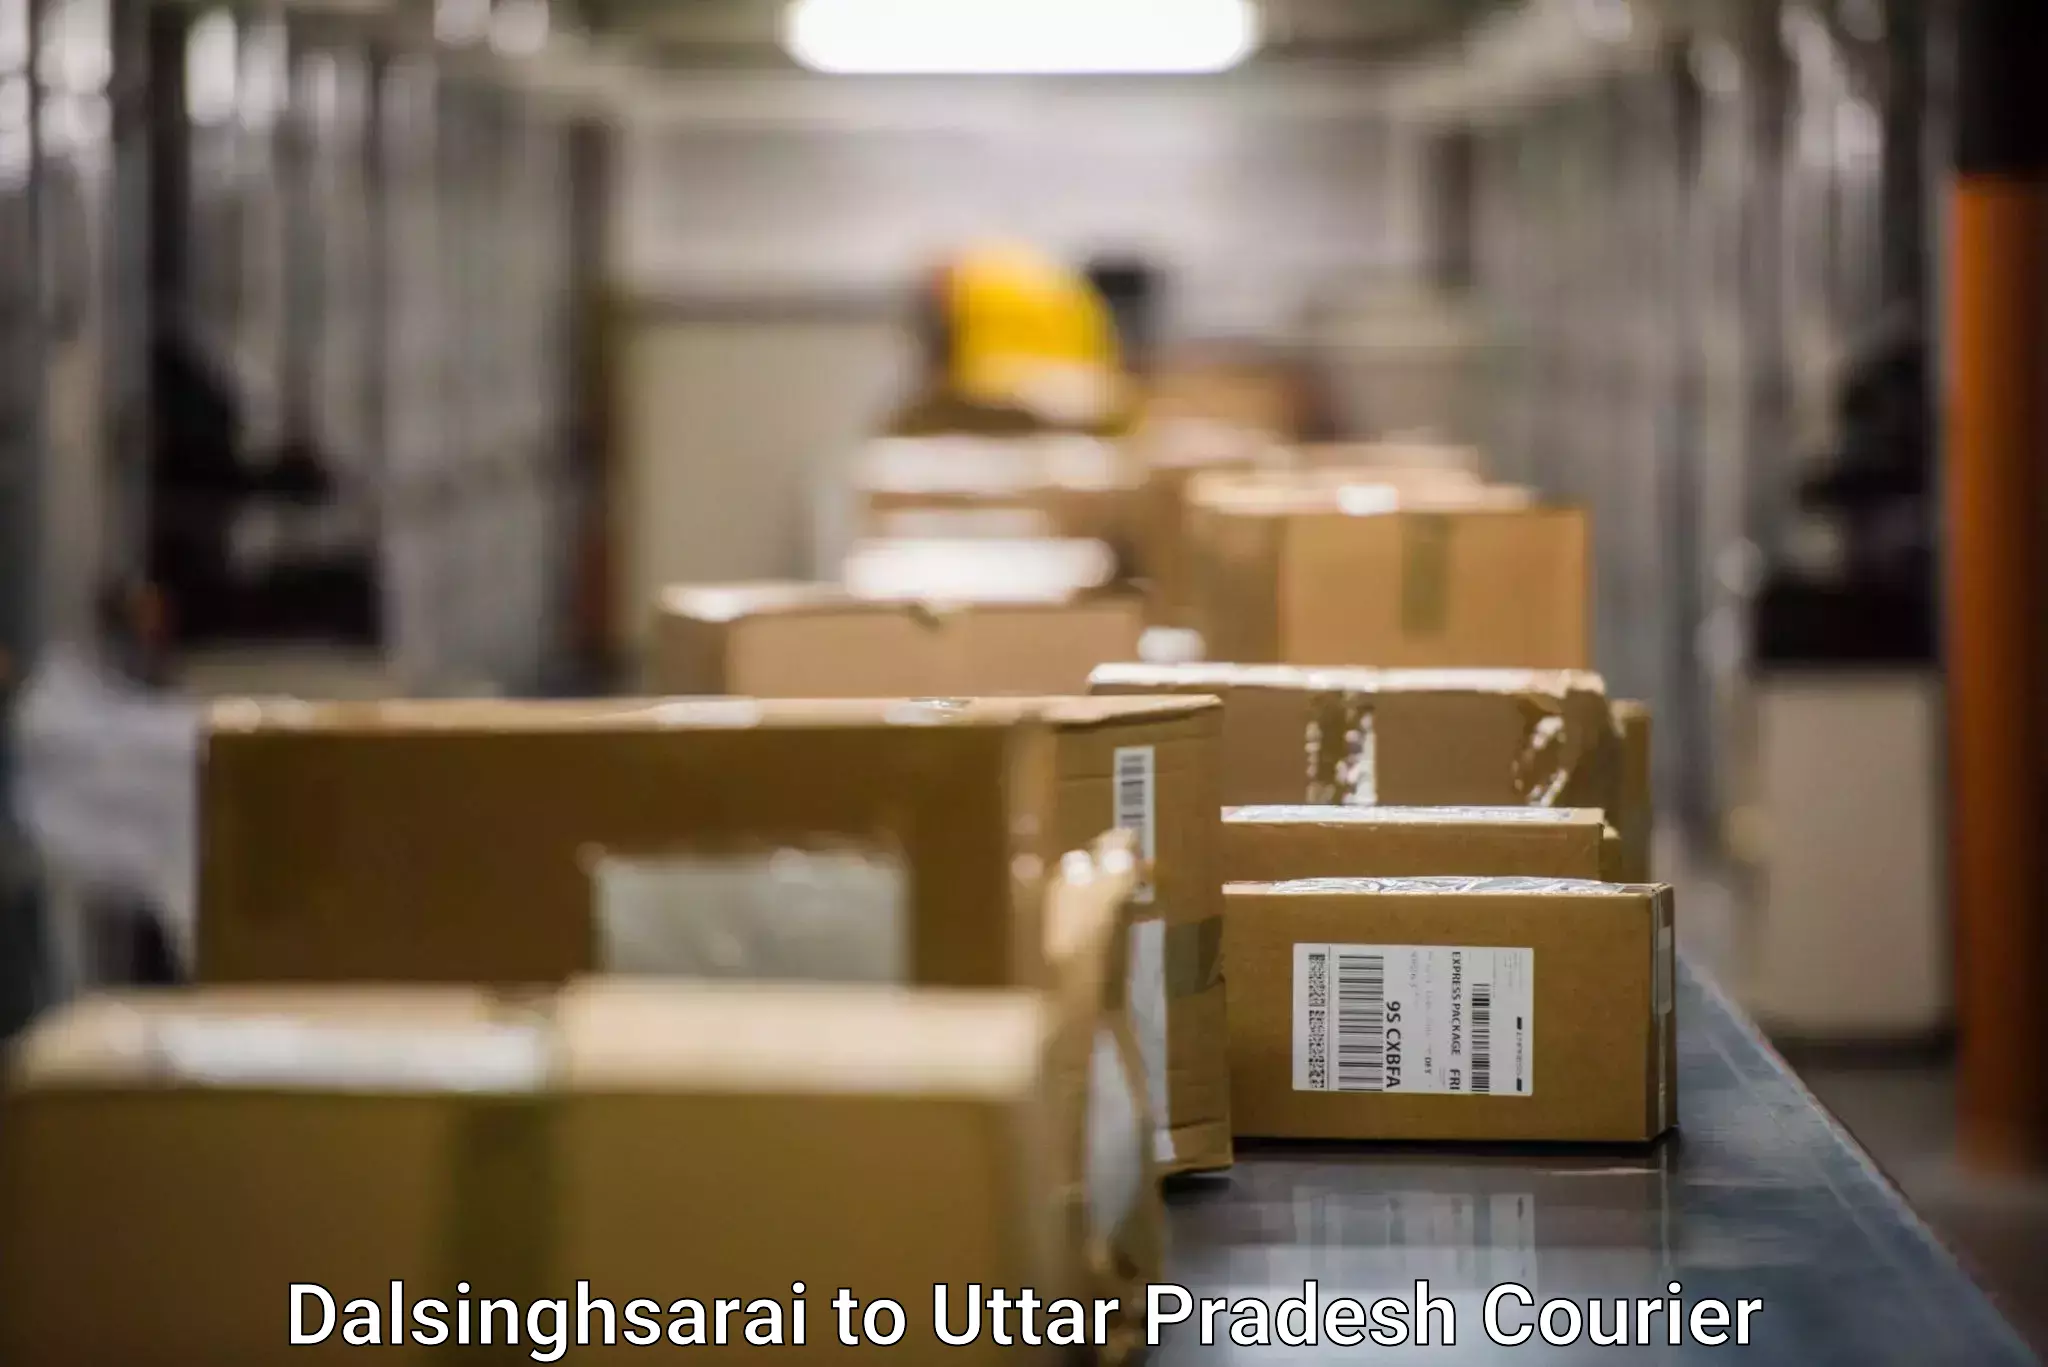 State-of-the-art courier technology Dalsinghsarai to Siddharthnagar